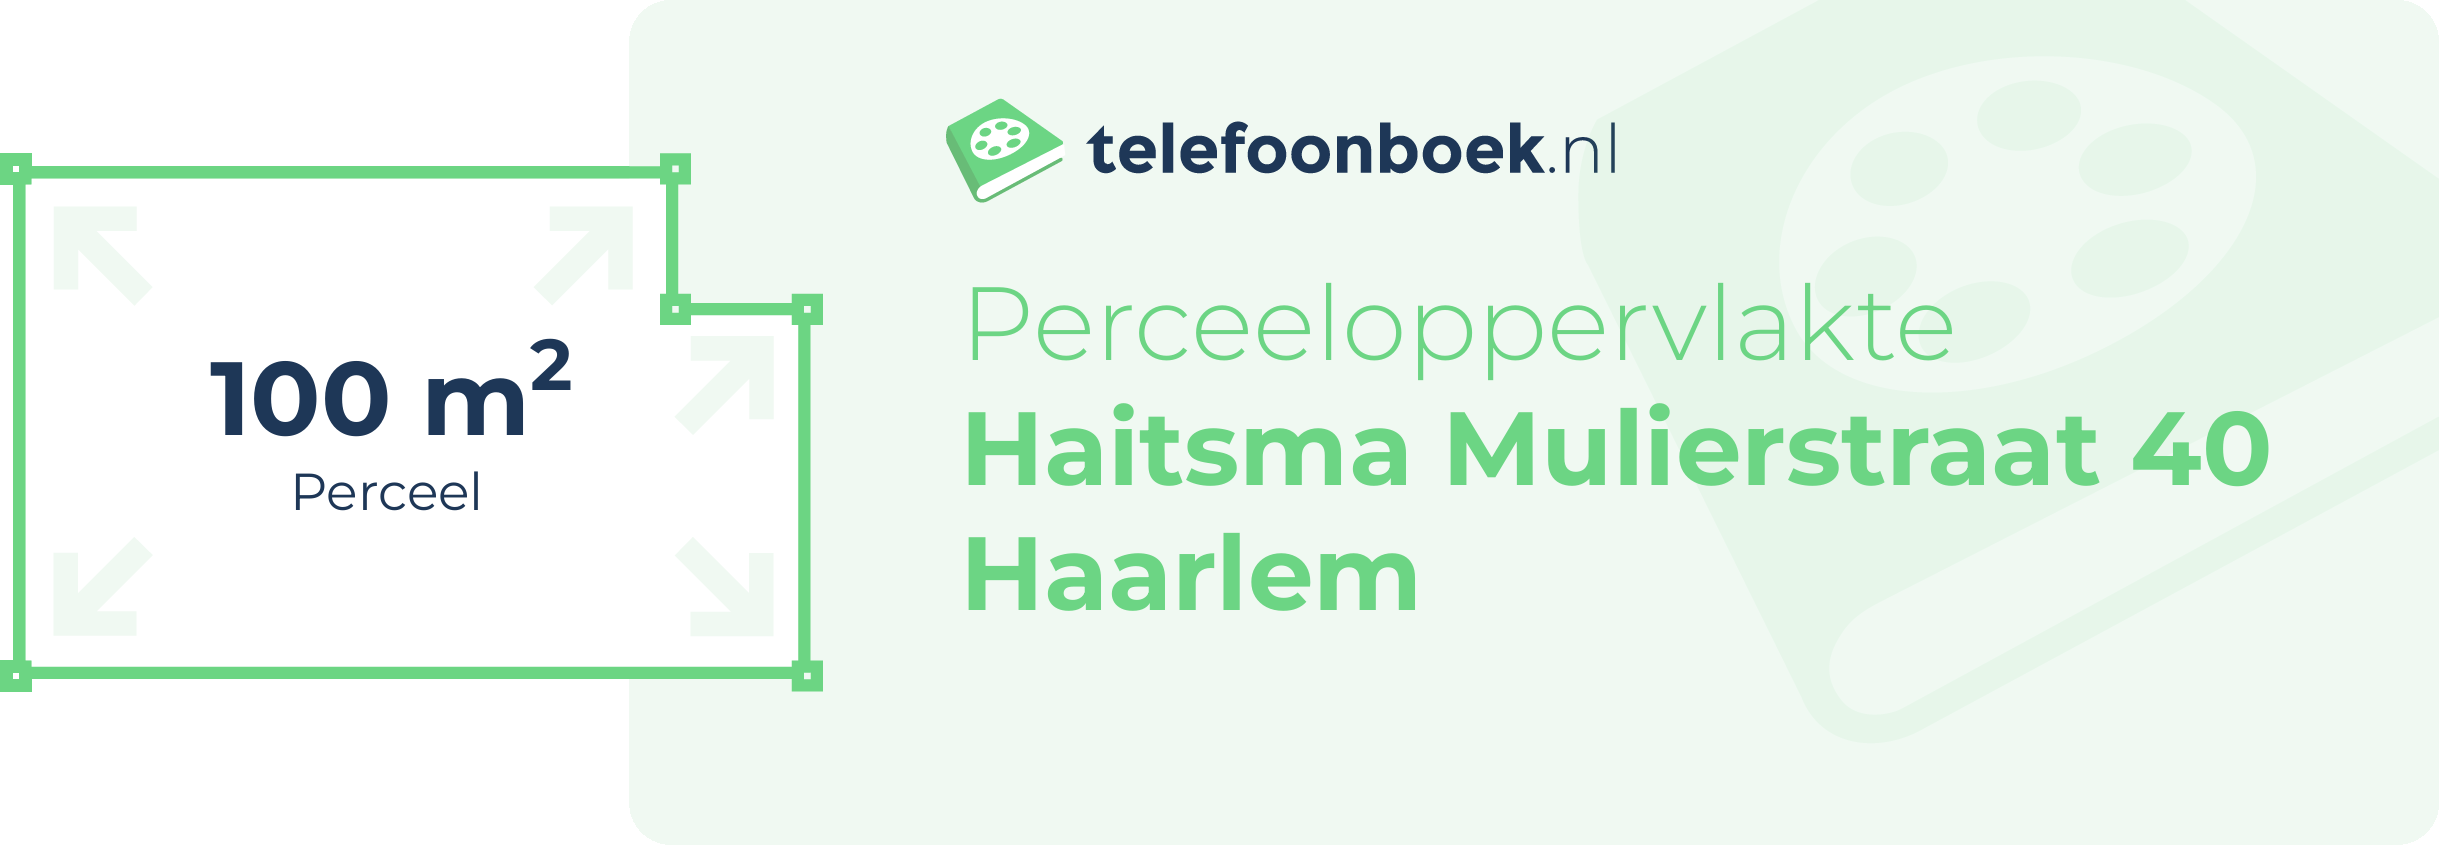 Perceeloppervlakte Haitsma Mulierstraat 40 Haarlem